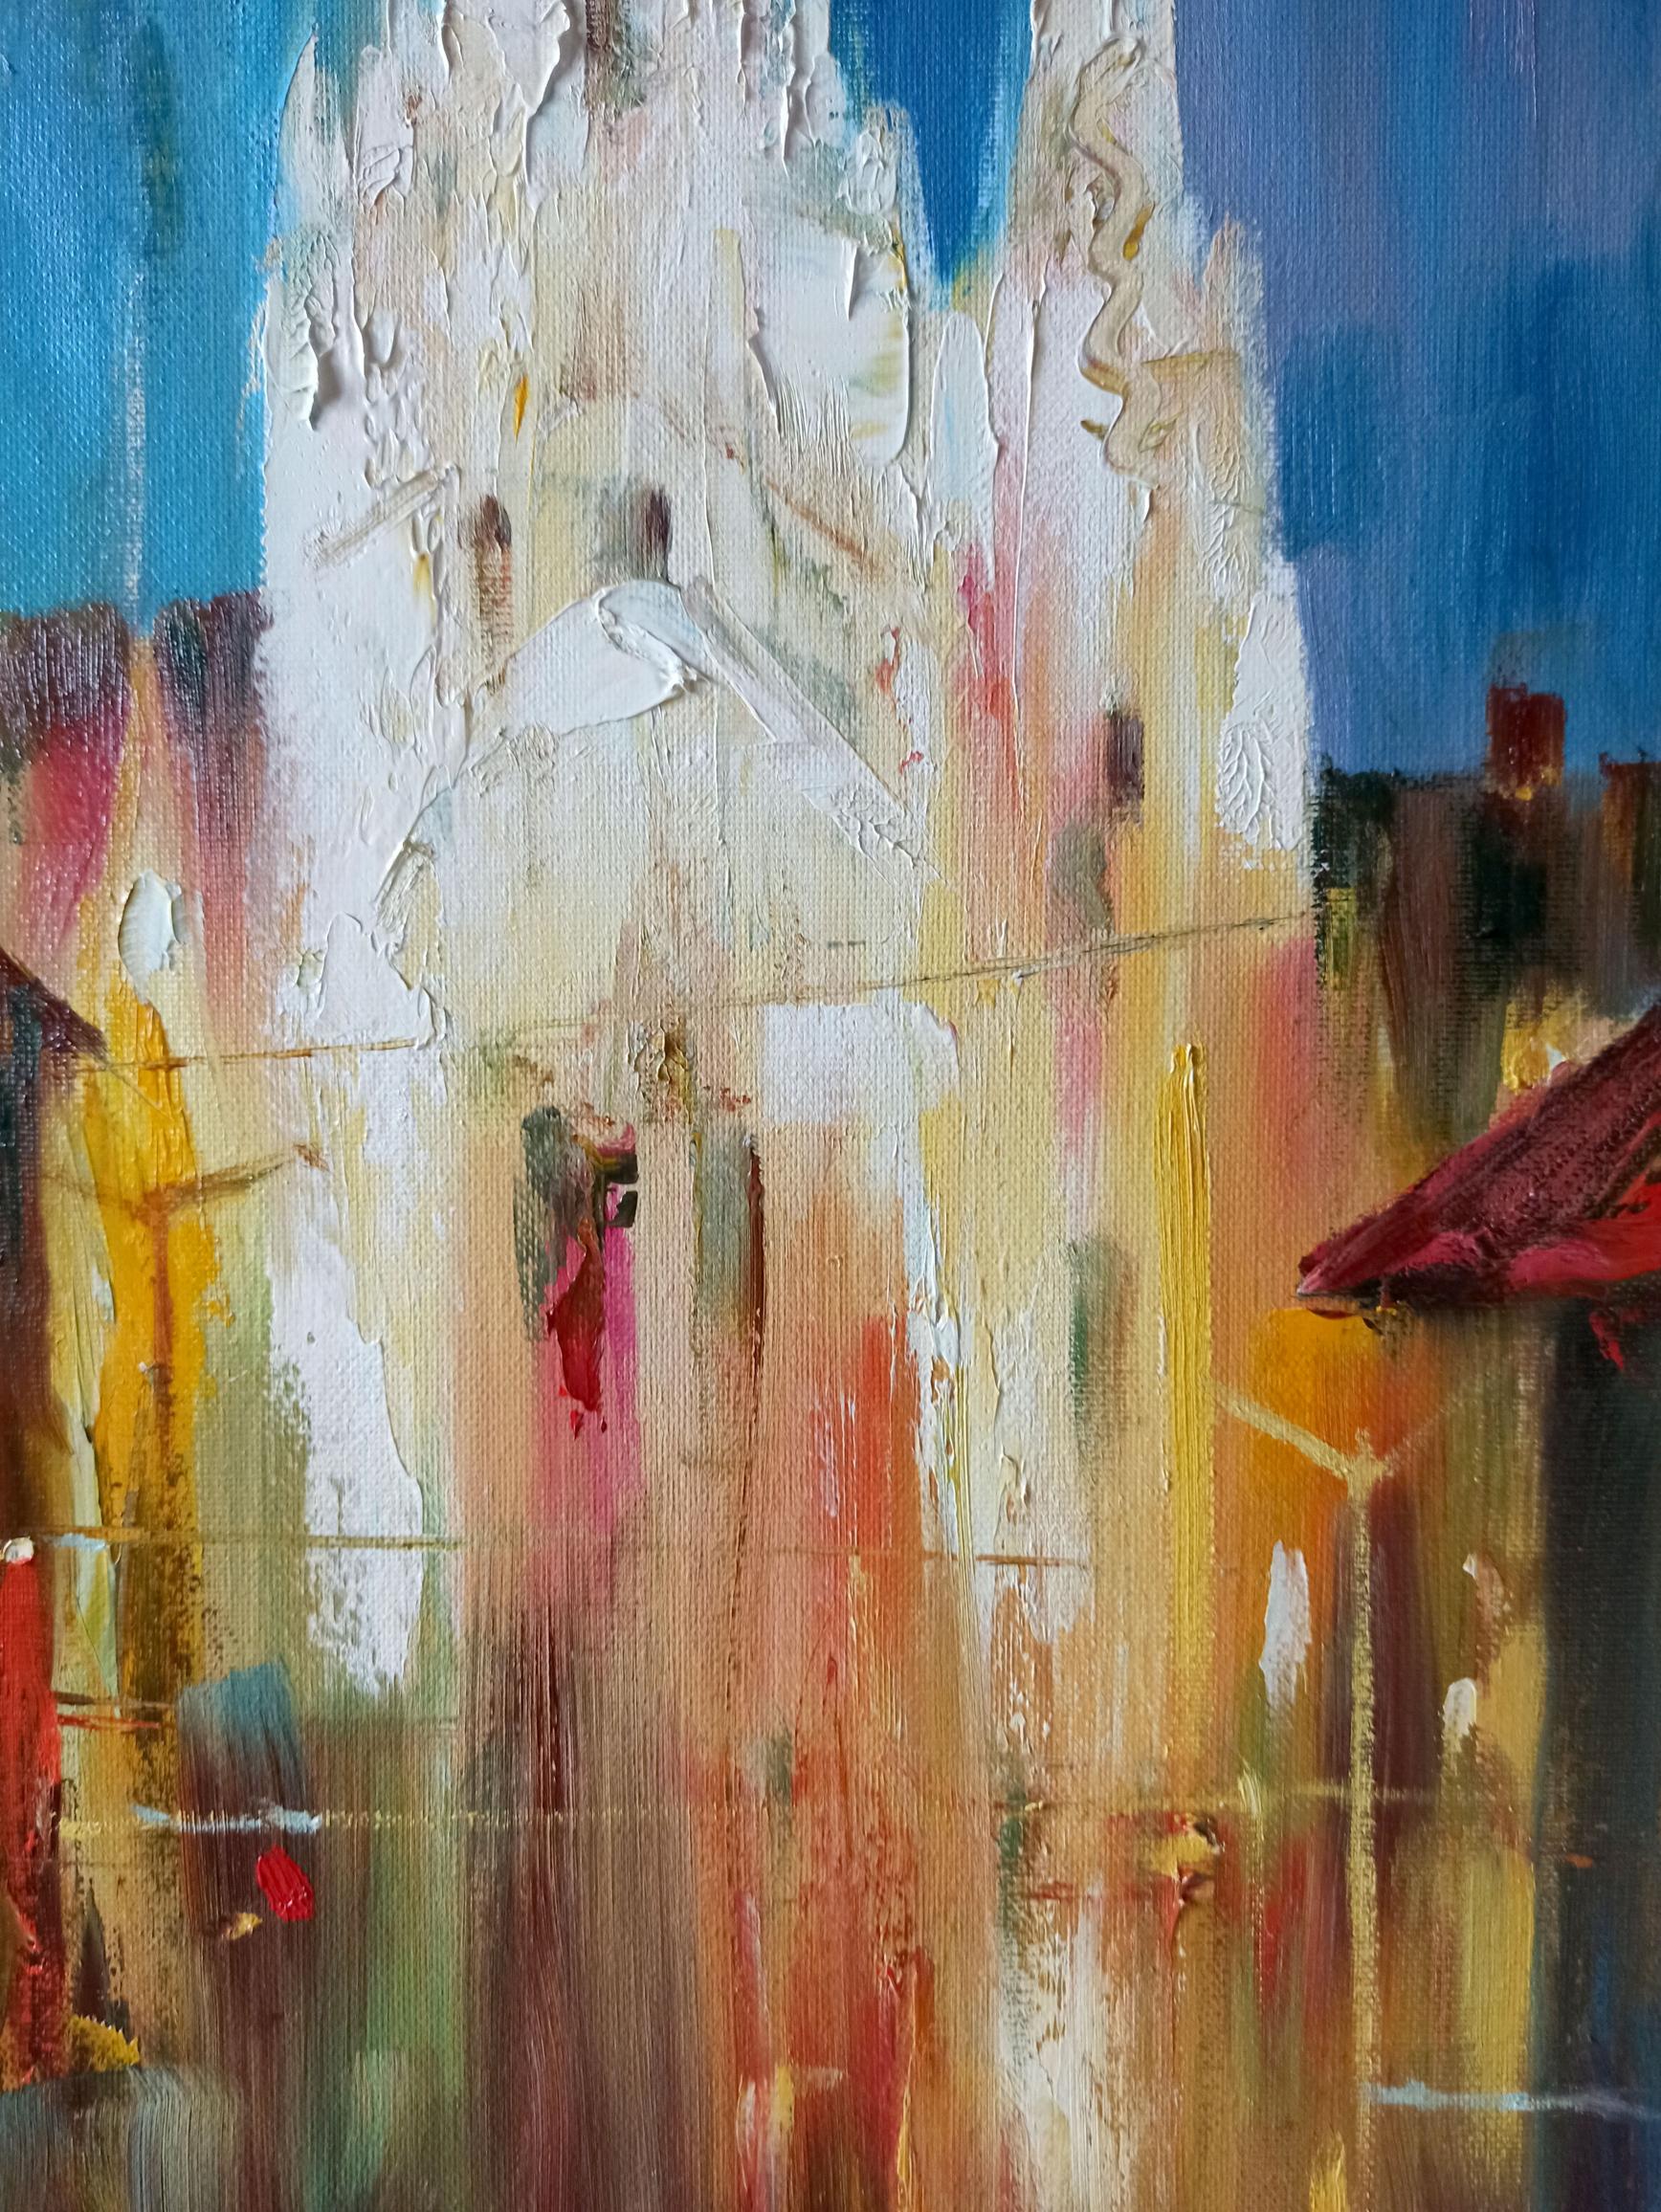 Through abstract oil techniques, Tarabanov portrays the enchanting allure of urban nightlife